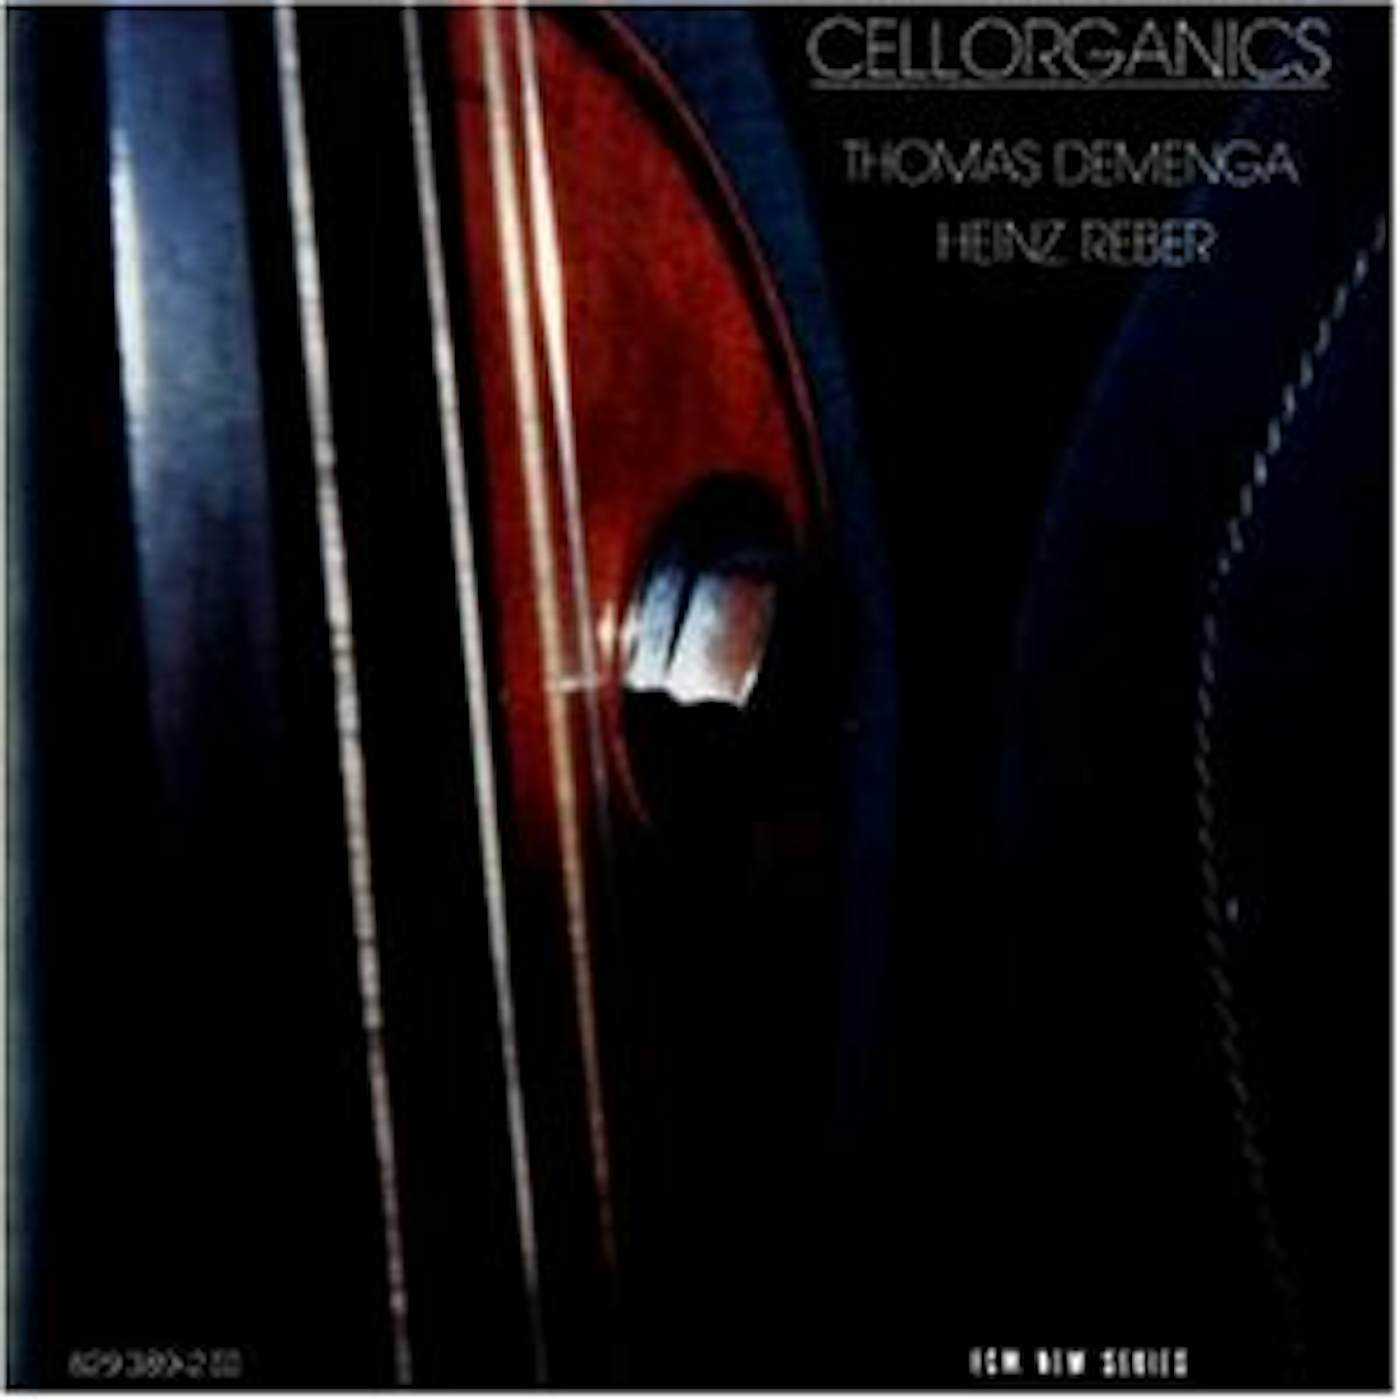 Thomas Demenga CELLORGANICS CD